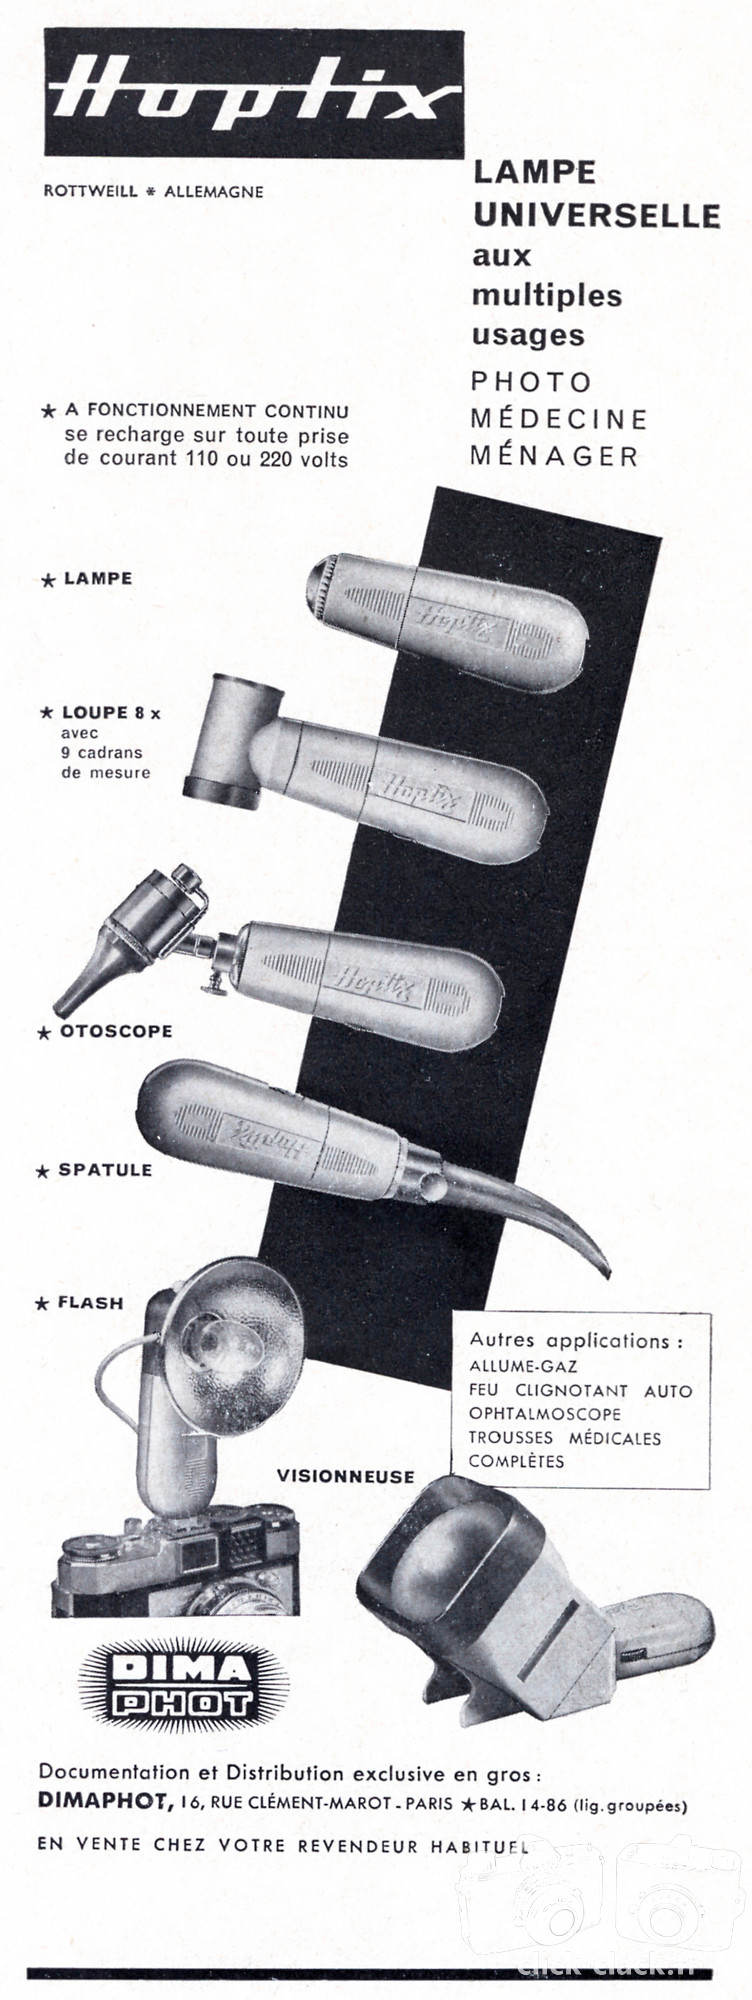 Dima-Phot - Lampe Hoptix universelle : lampe, lope x8, otoscope, spatule, flash, visionneuse - 1960